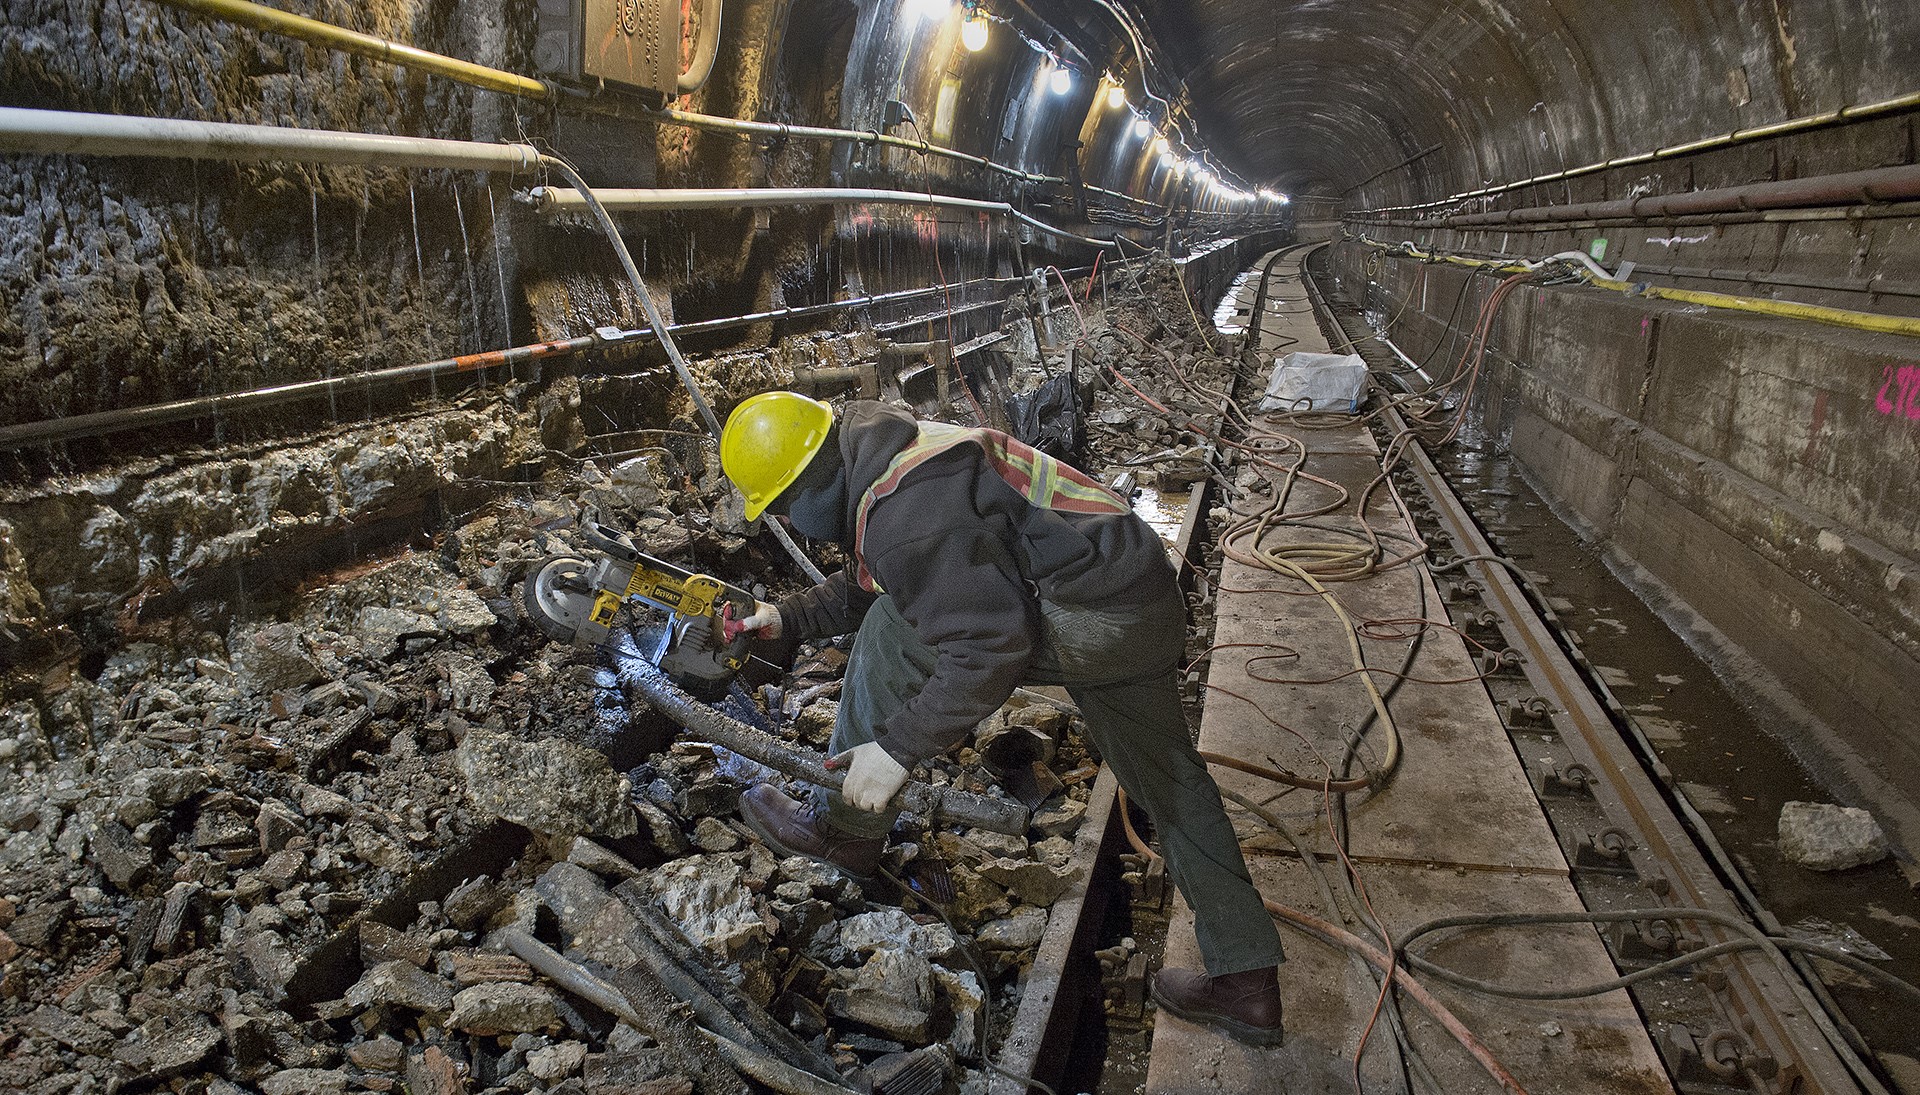 MTA worker removes debris in Montague tunnel